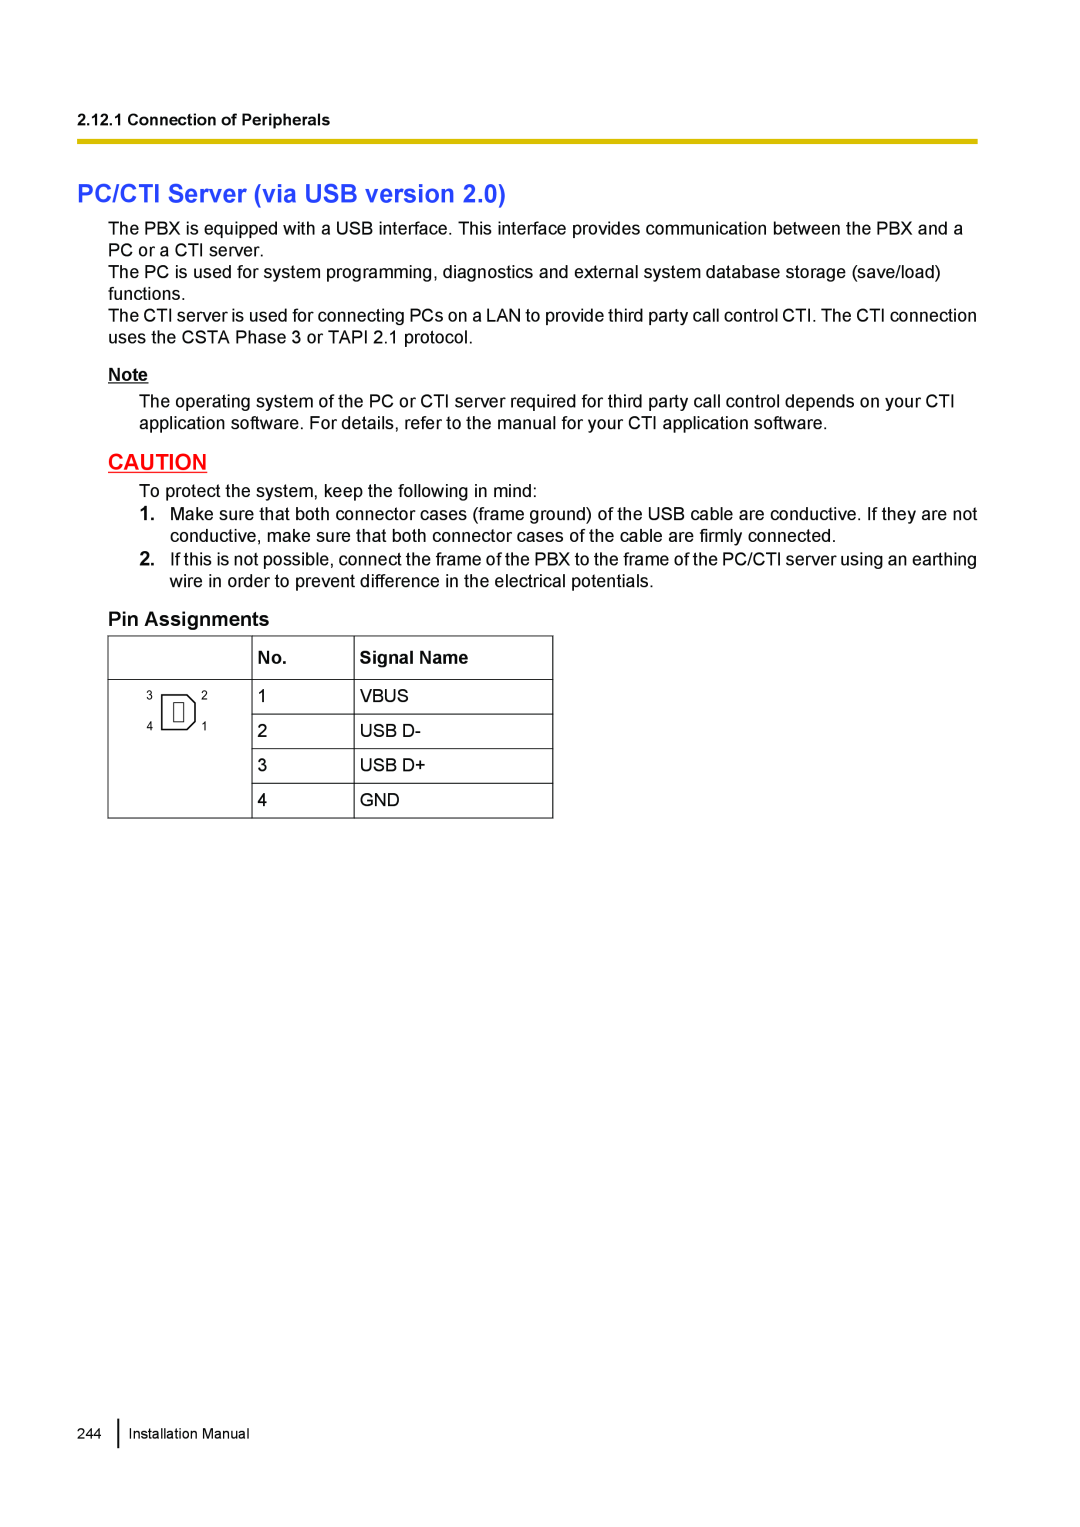 Panasonic KX-TDA100 installation manual PC/CTI Server via USB version, Pin Assignments 